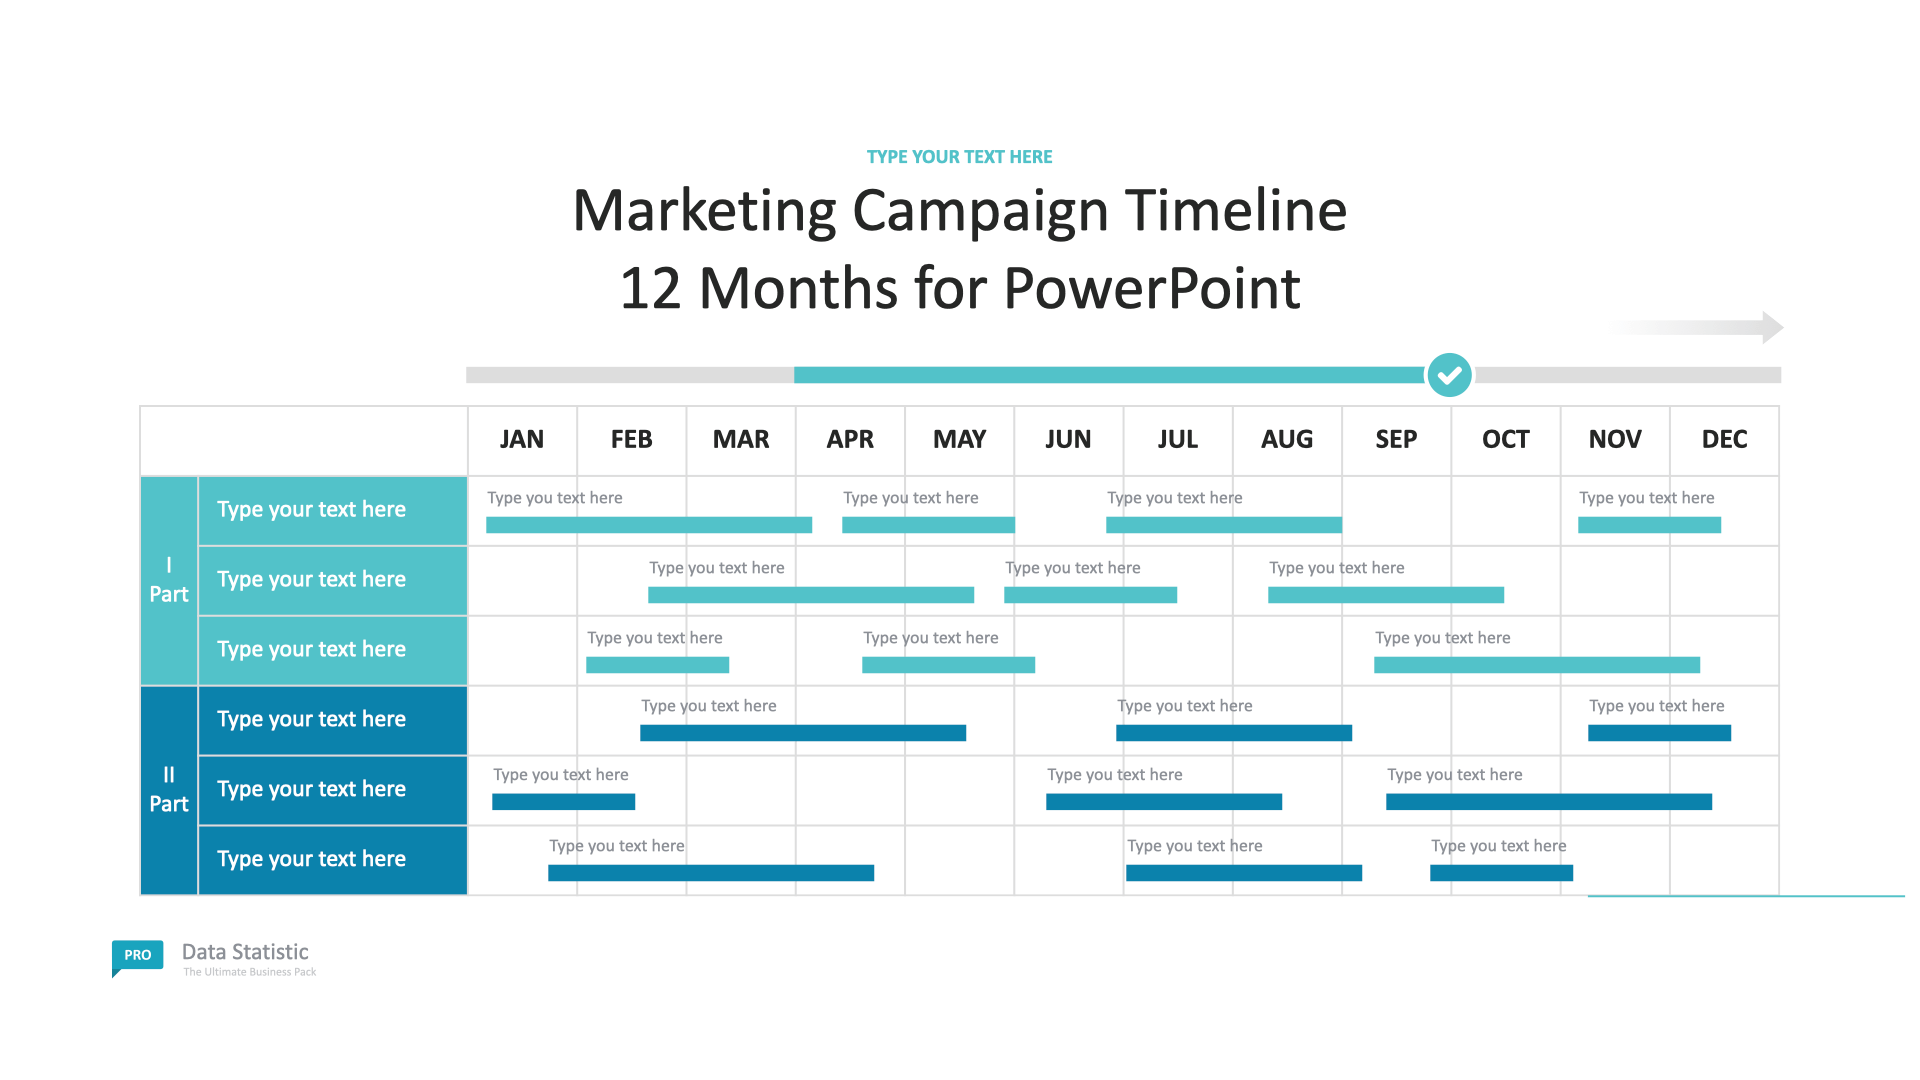 marketing campaign presentation template